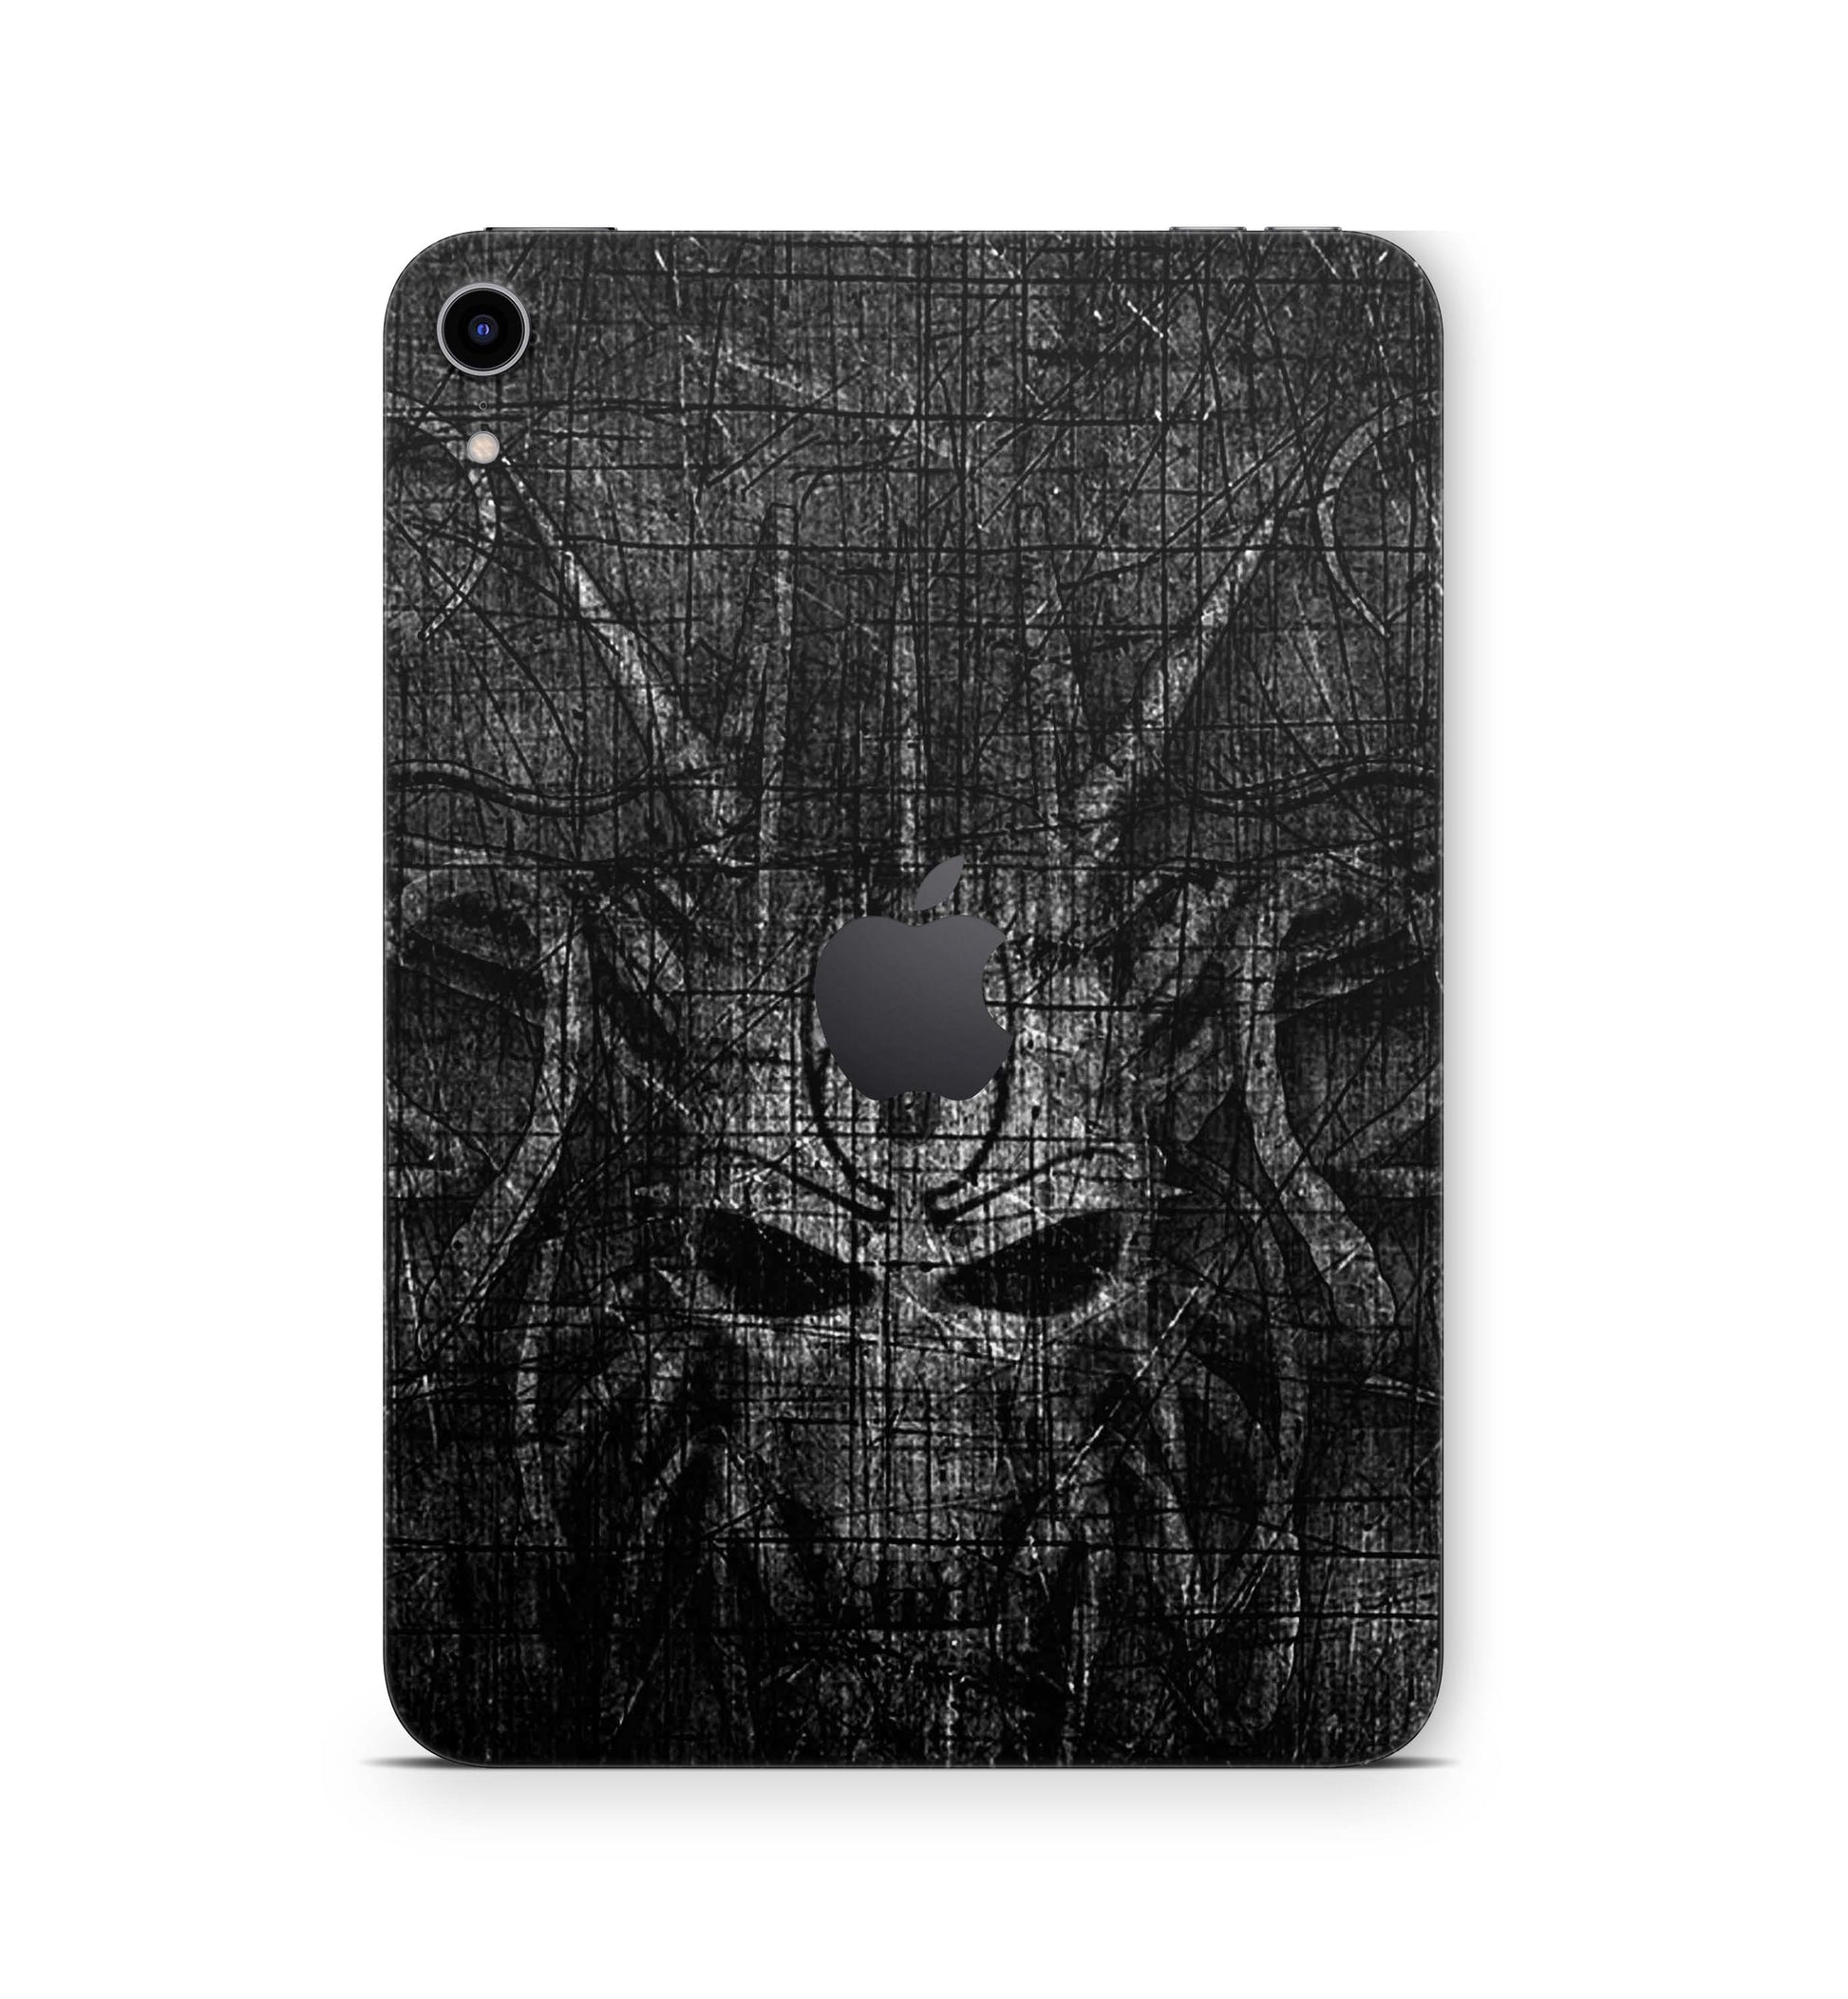 Apple iPad Skin Design Cover Folie Vinyl Skins & Wraps für alle iPad Modelle Aufkleber Skins4u Black-Demon  